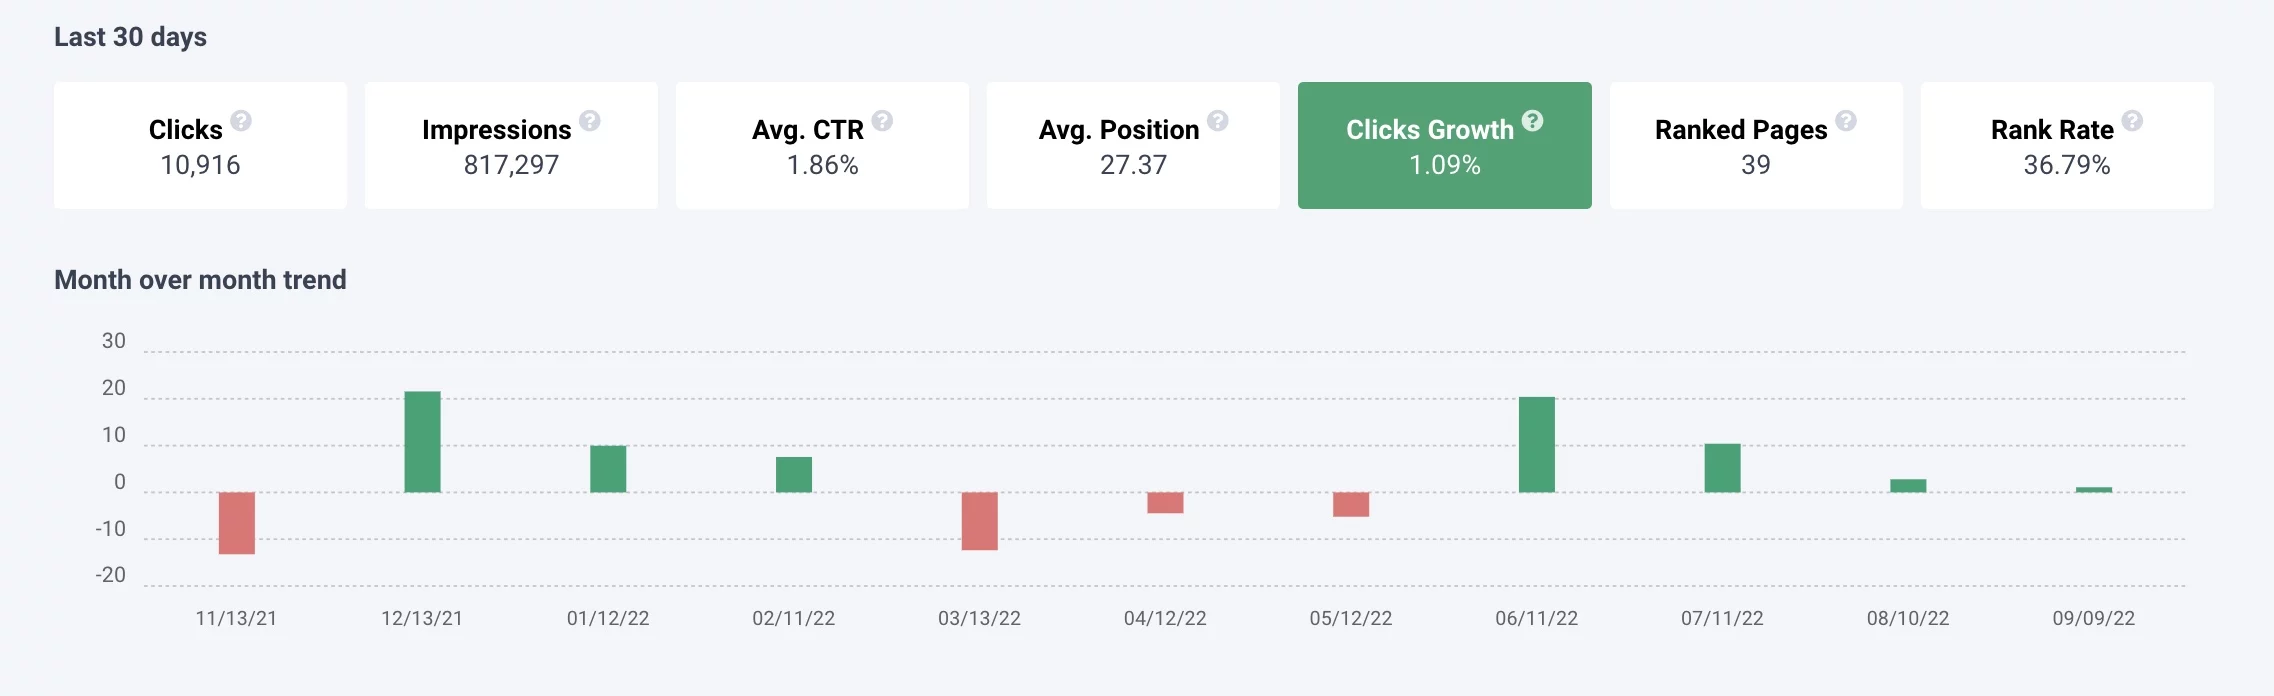 frase gsc analytics clicks growth visualizer